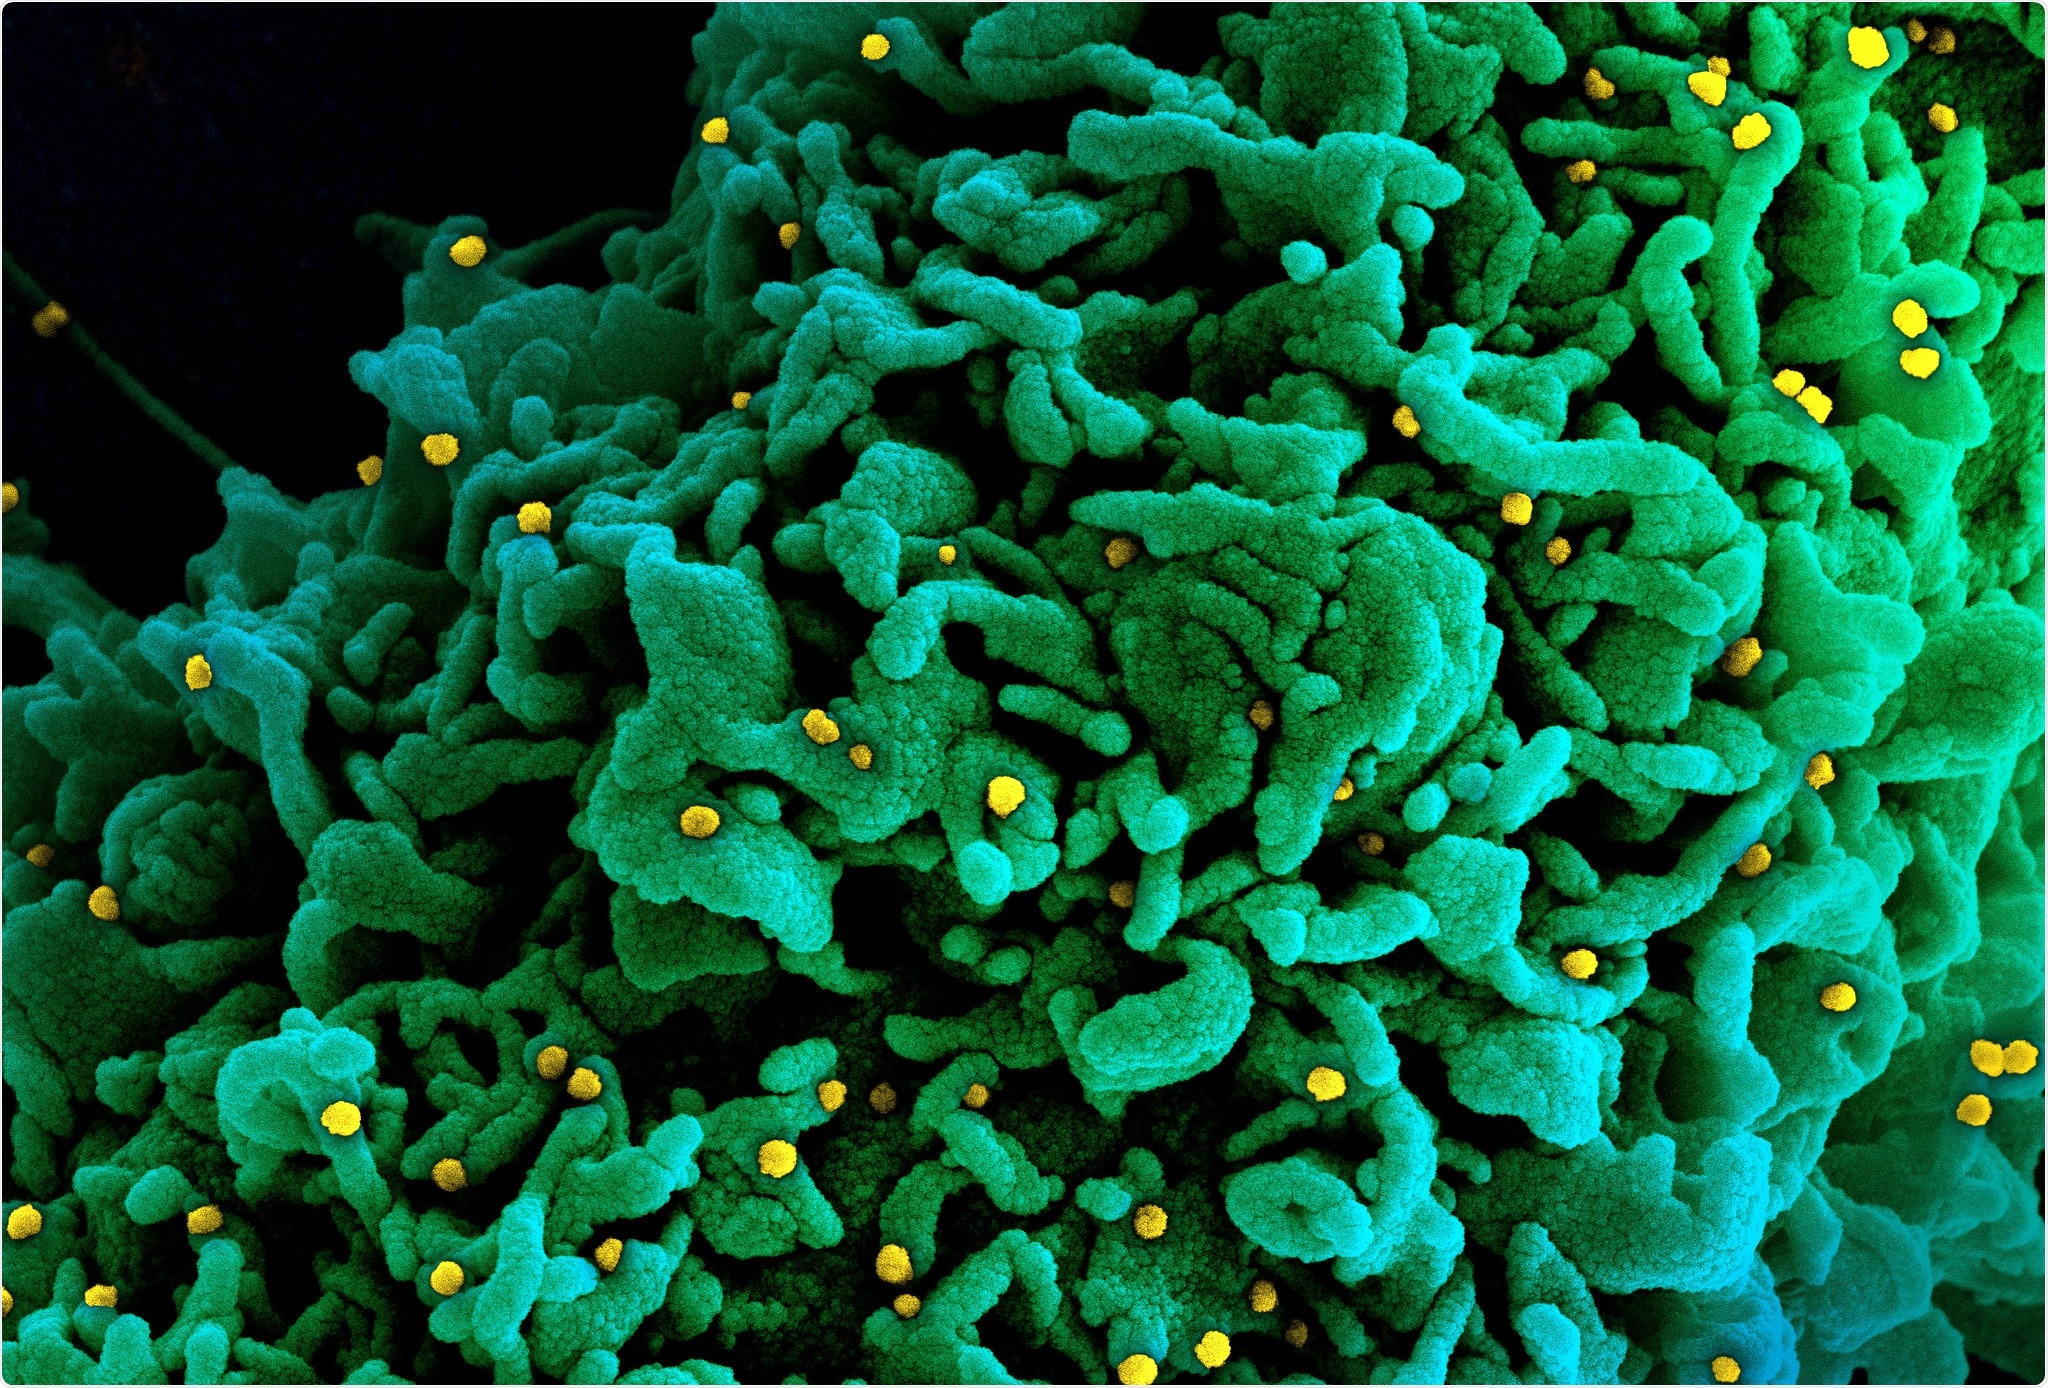 Study: Spike protein multiorgan tropism suppressed by antibodies targeting SARS-CoV-2. Image Credit: NIAID